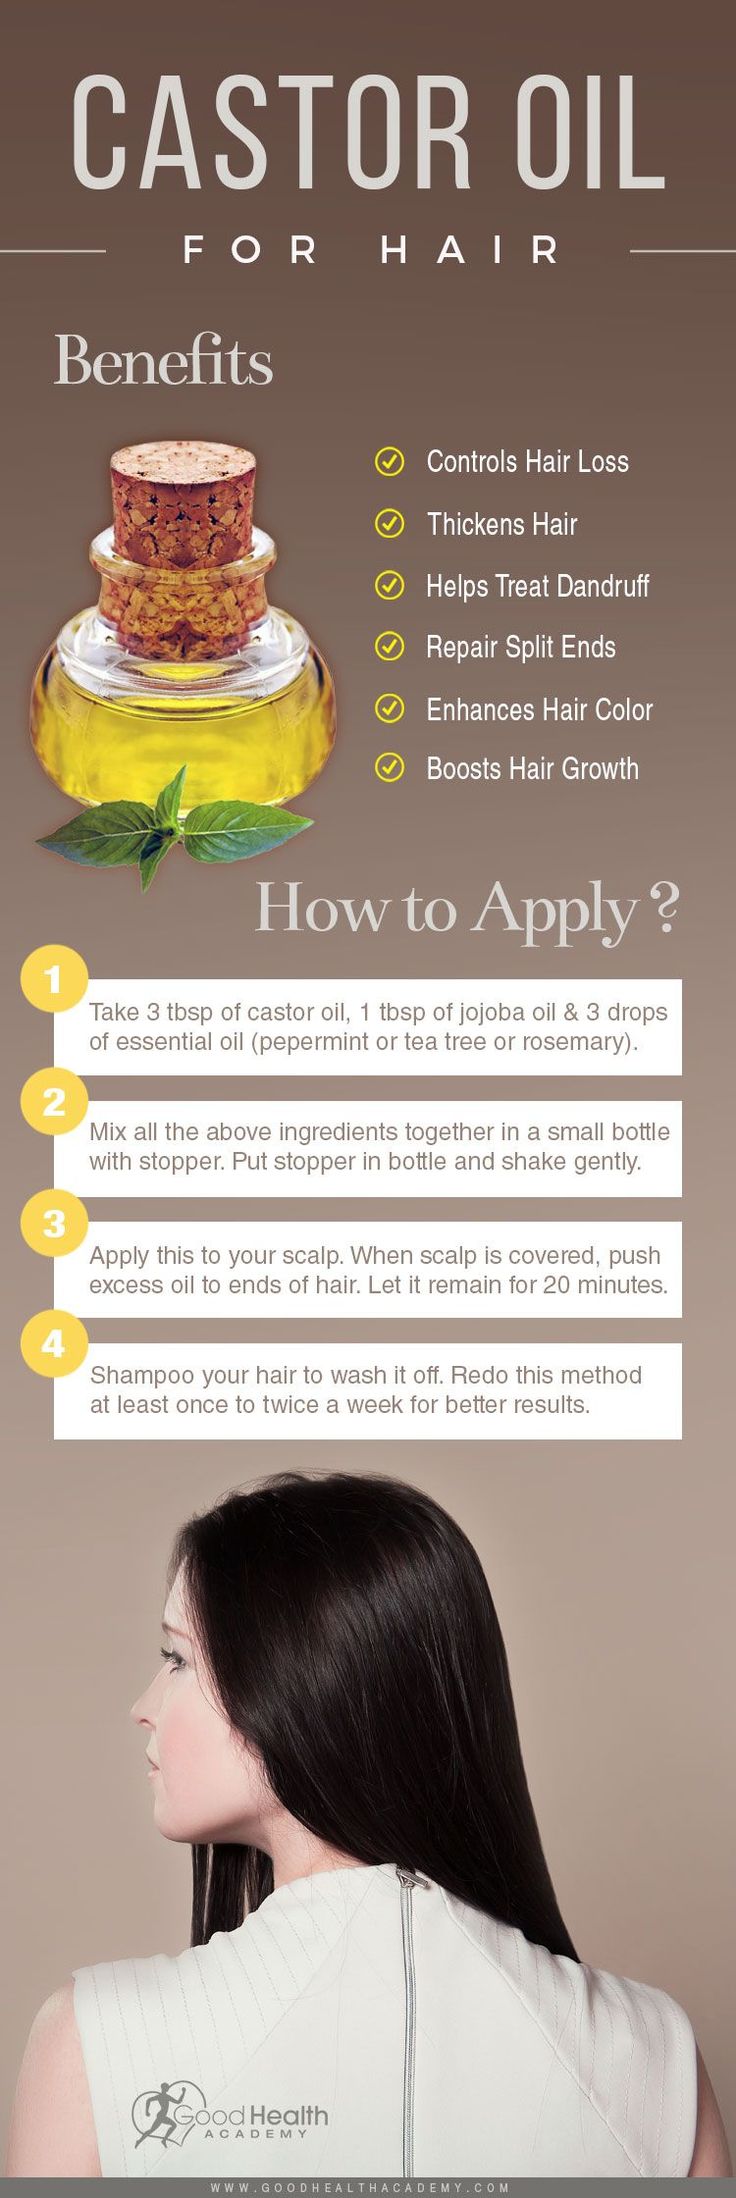 Castor oil contains natural compounds that promote hair growth. It provides nour...